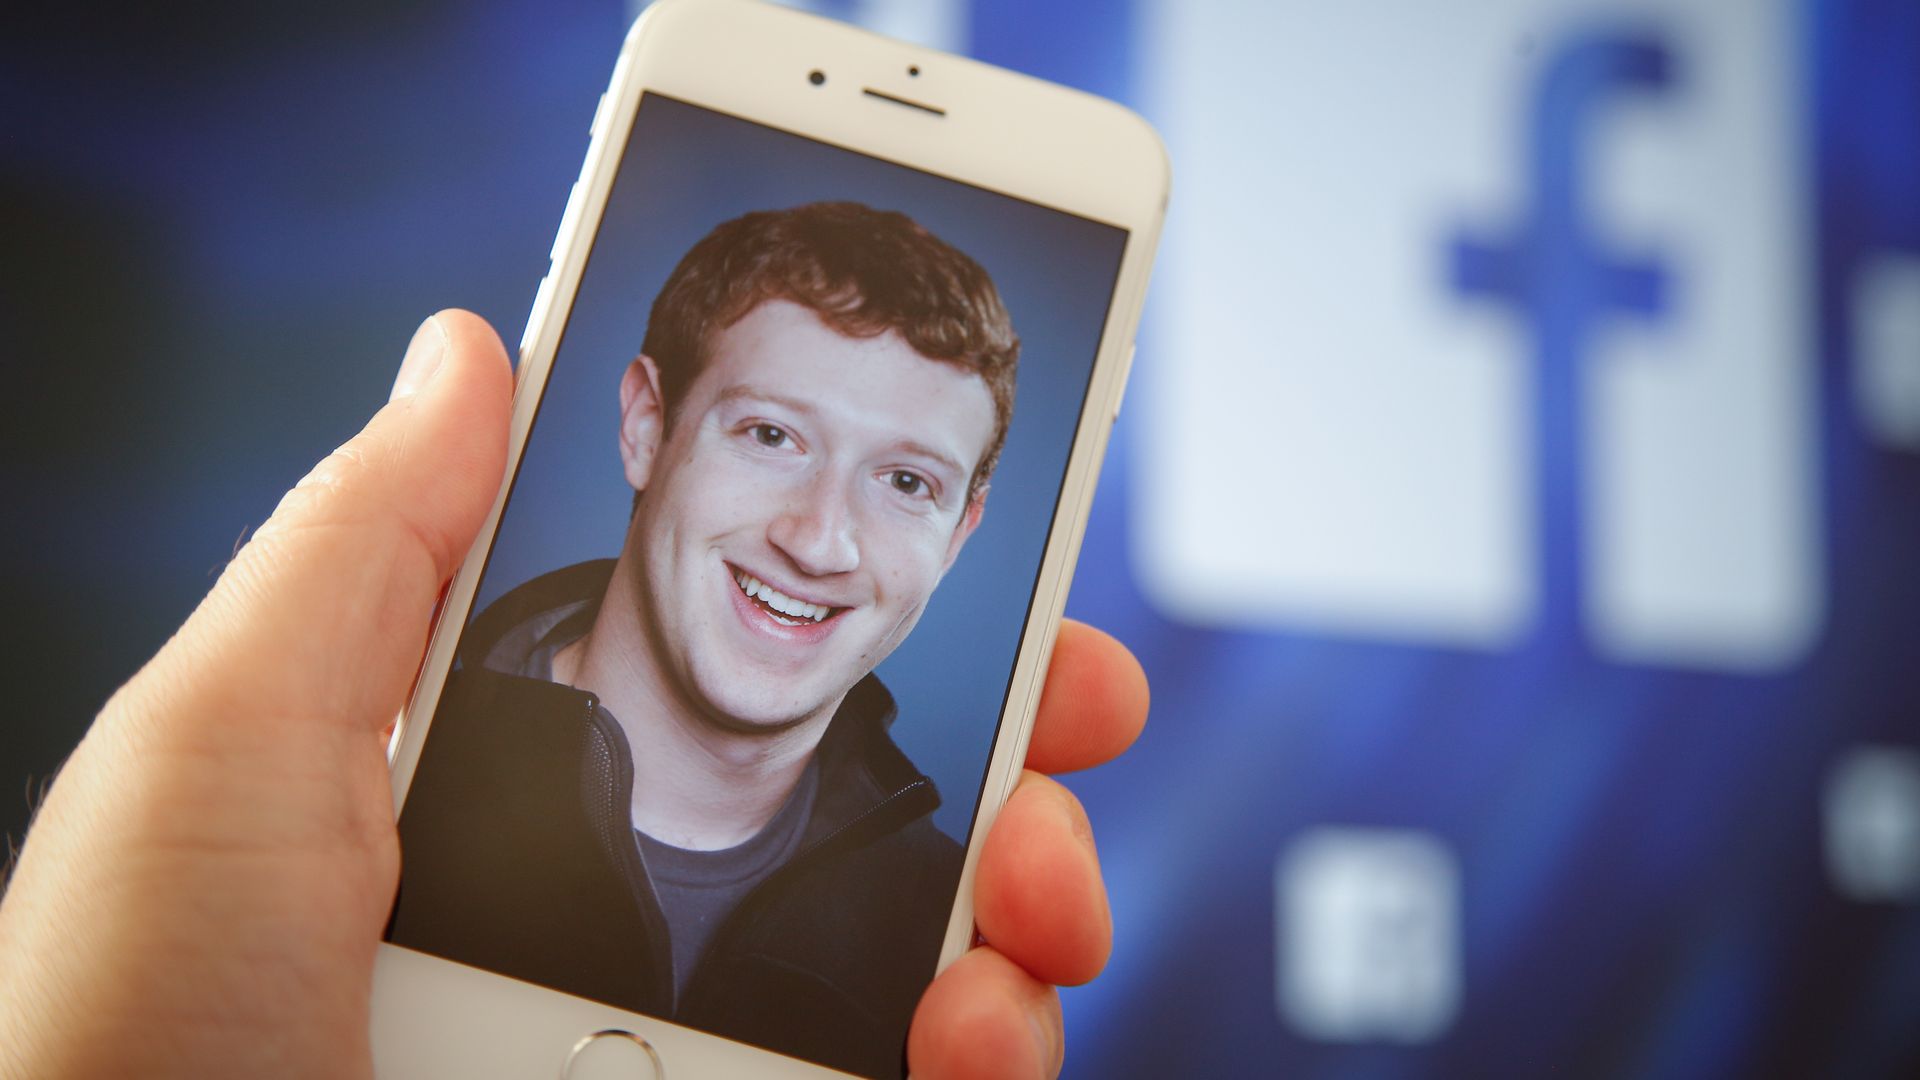 A portrait of Facebook founder Mark Zuckerberg